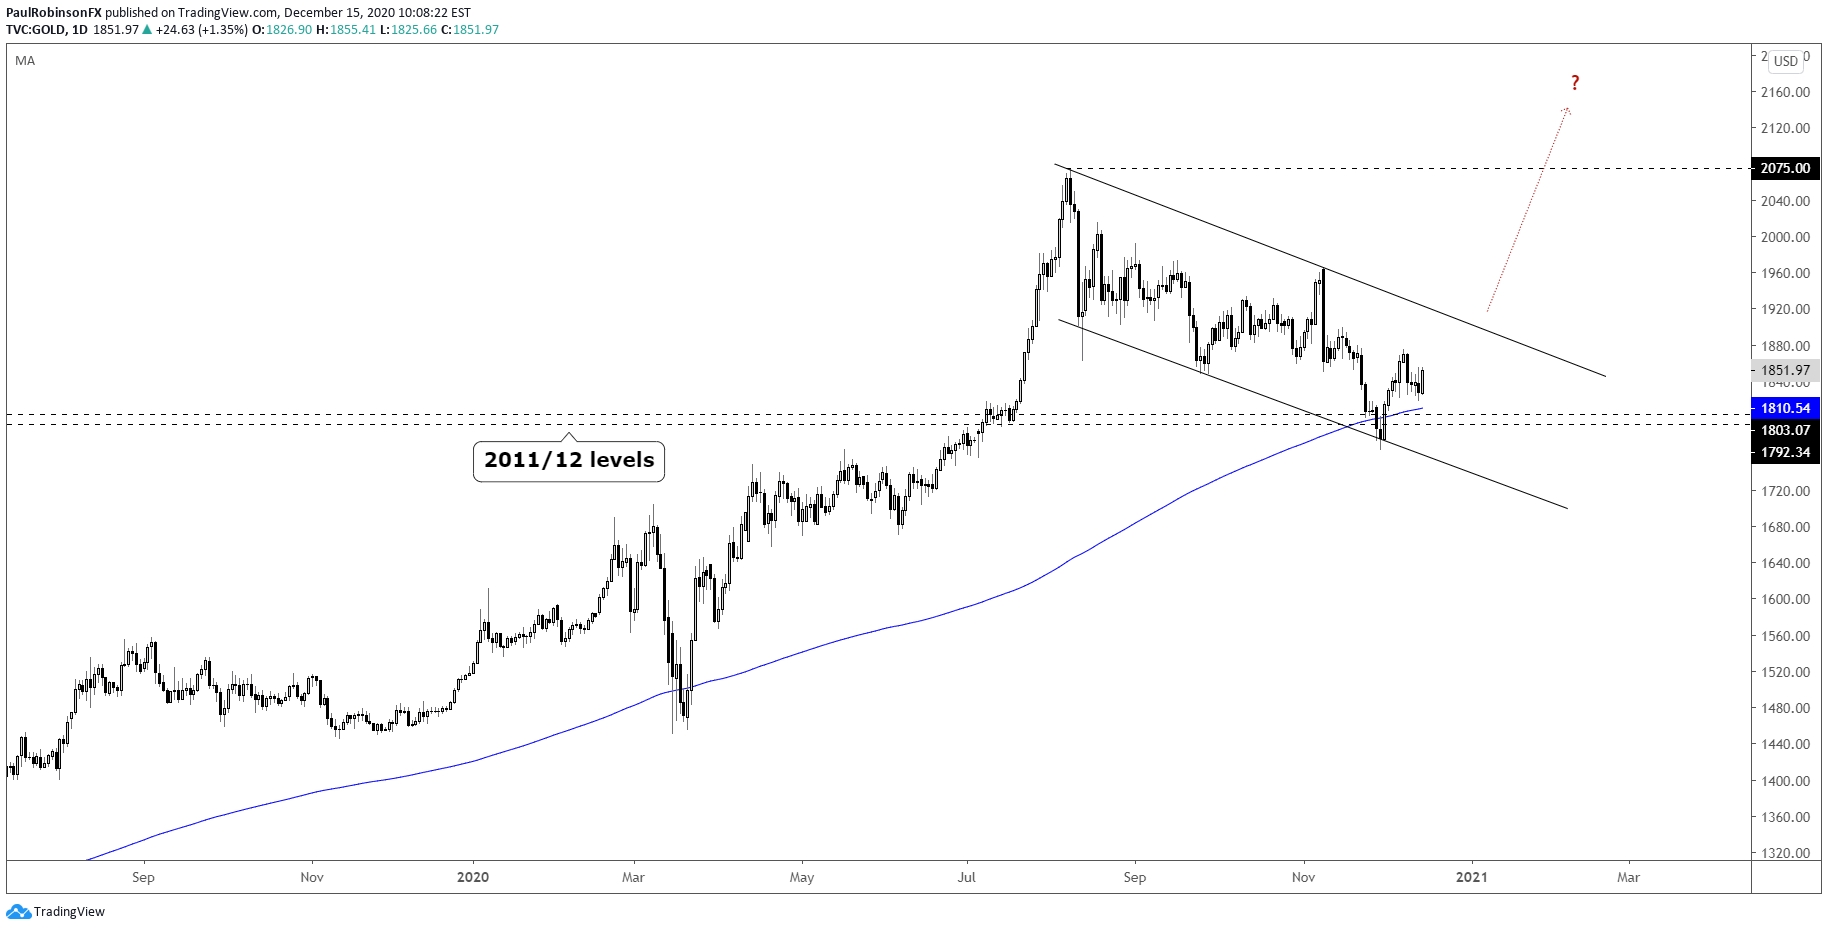 Gold 1Q 2021 Forecast: Gold Outlook Bullish Headed Into